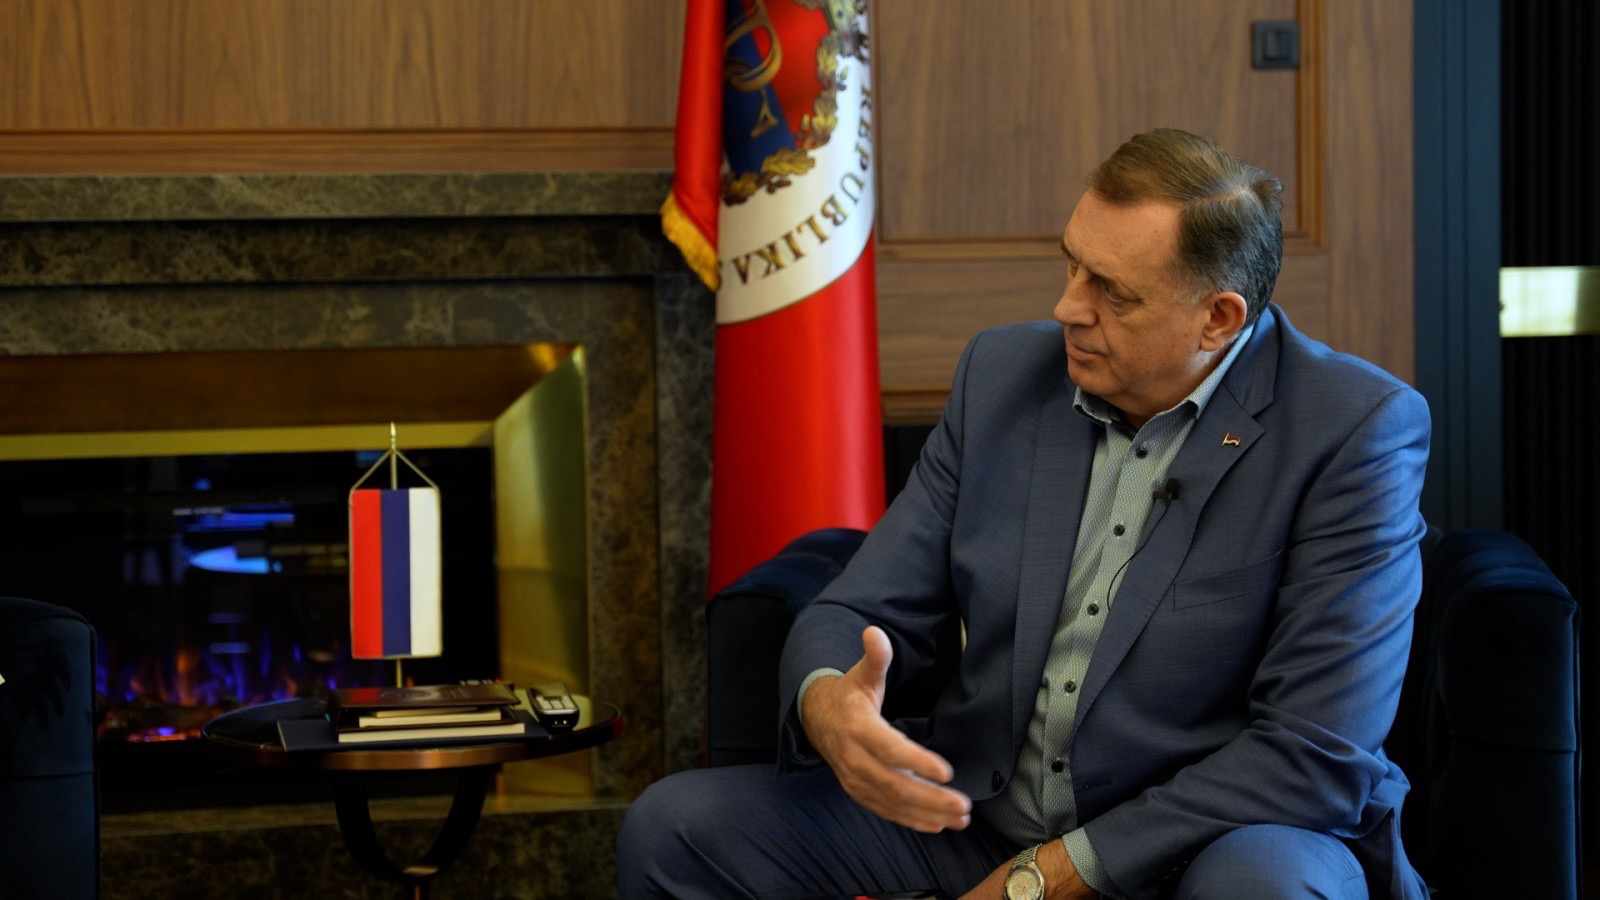 President of Republika Srpska, Milorad Dodik